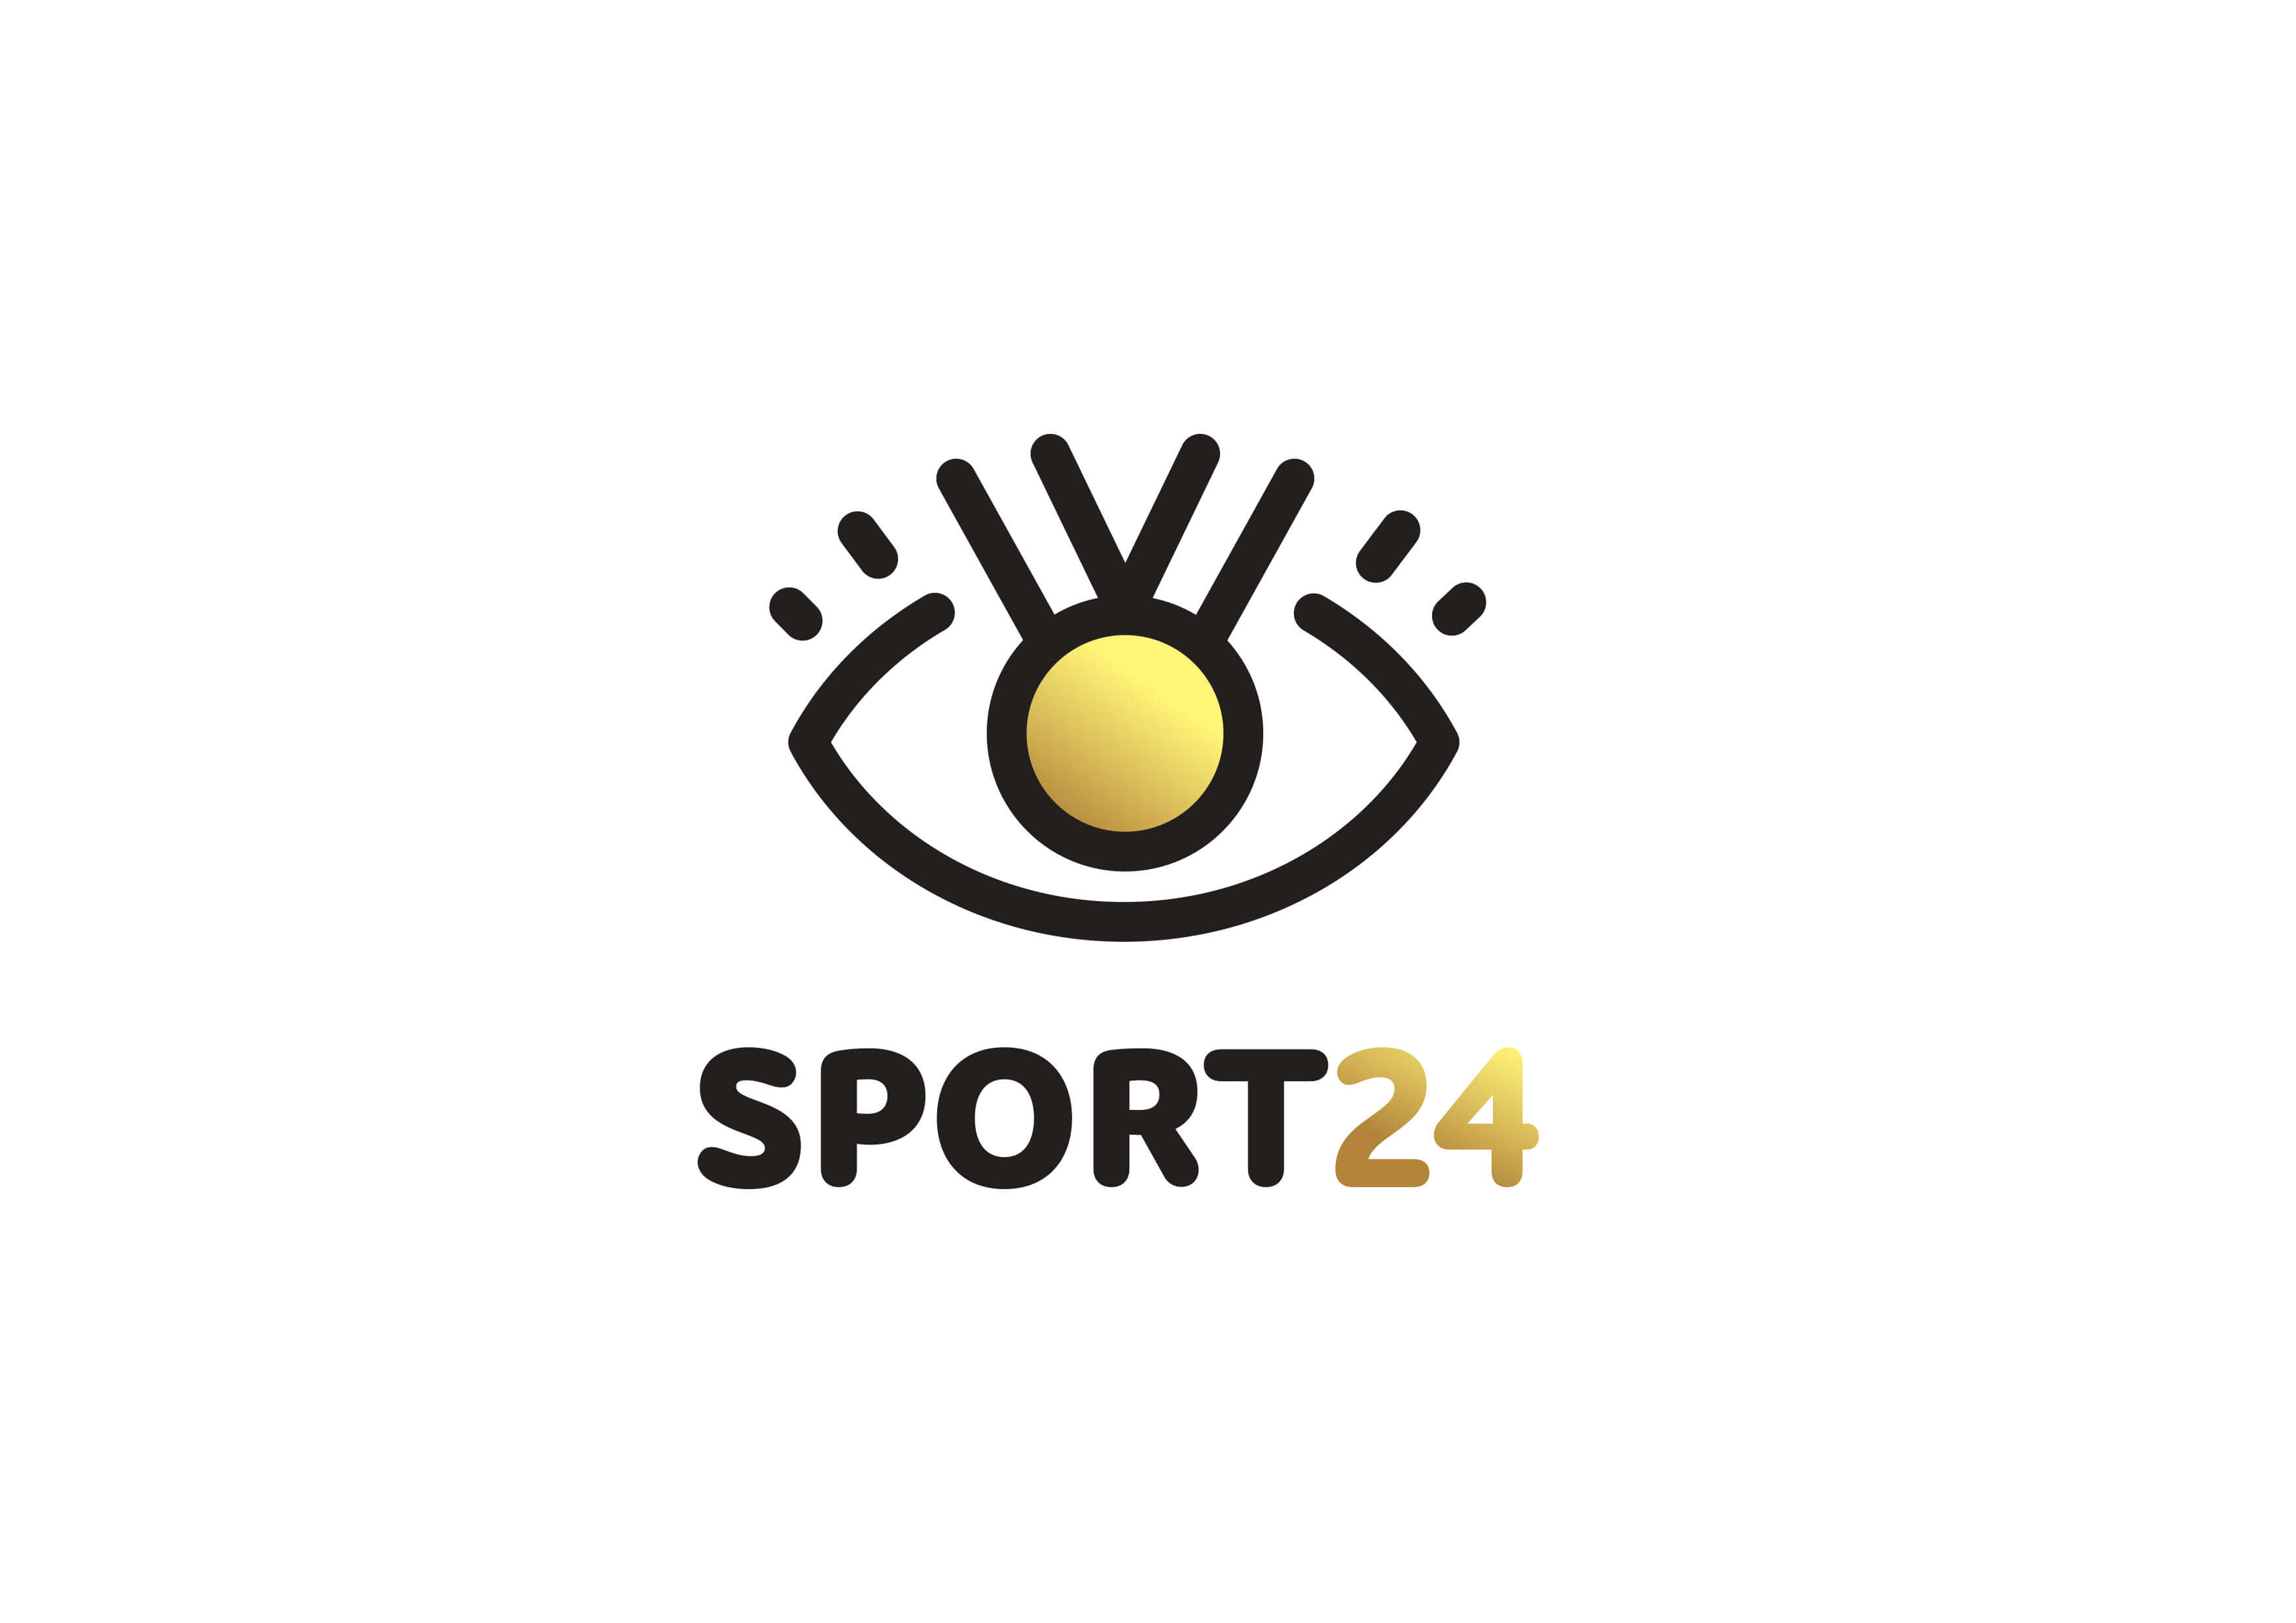 sport24 identity process 14